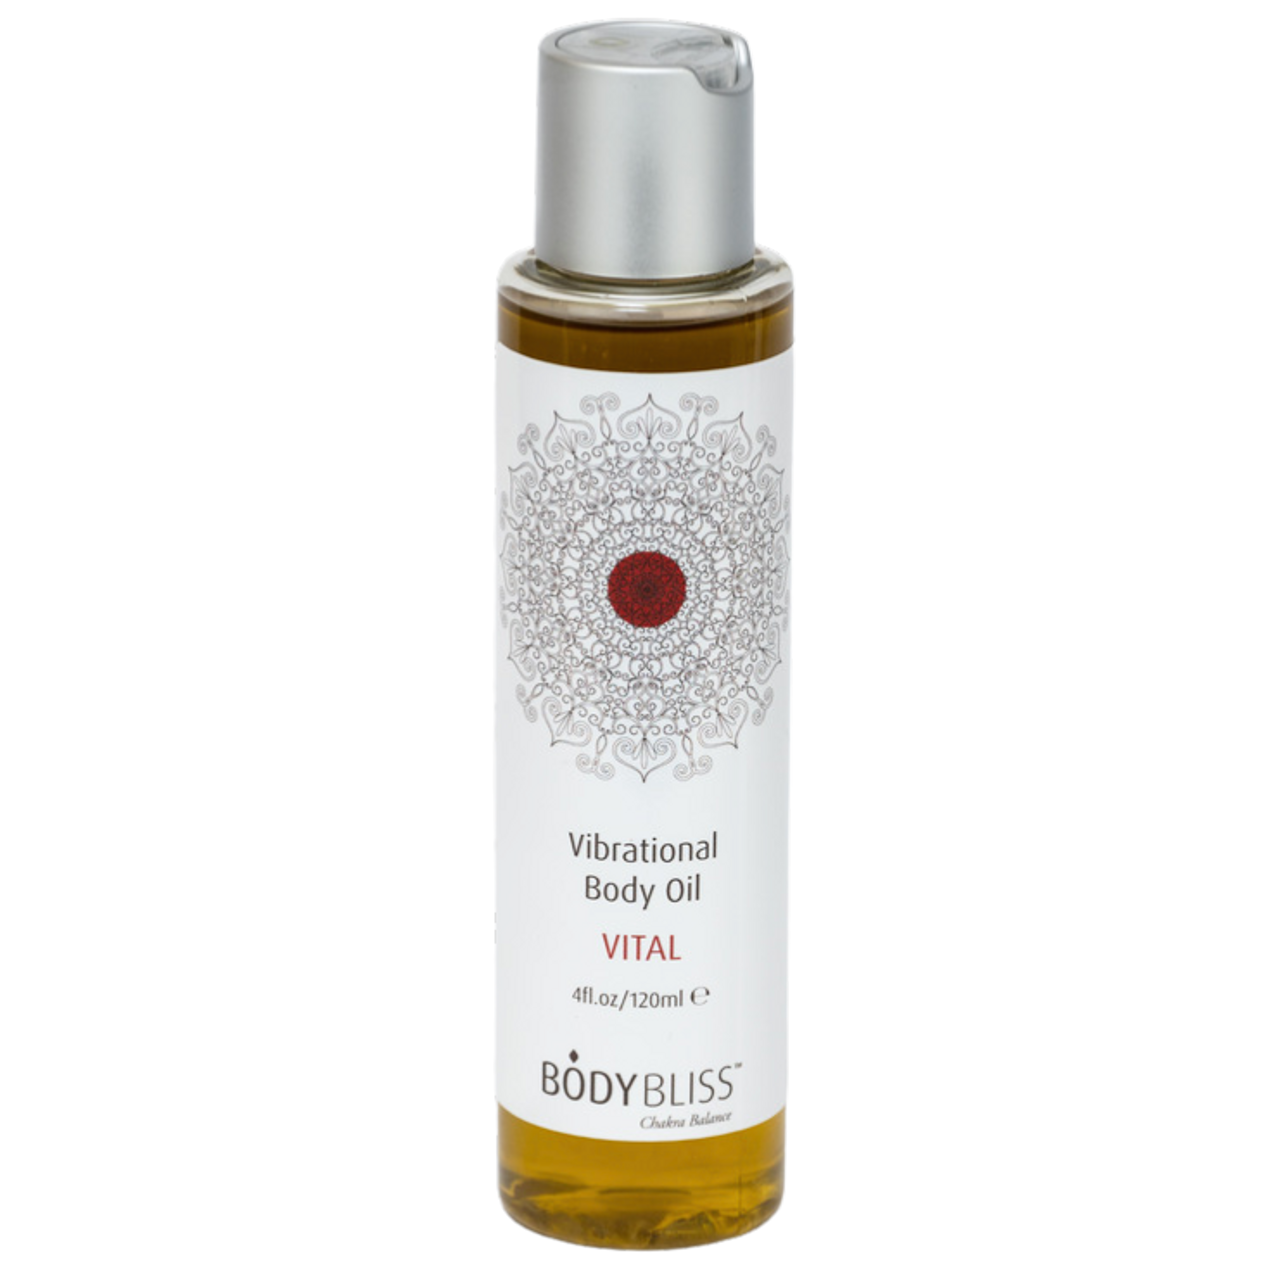 VITAL Vibrational Body Oil